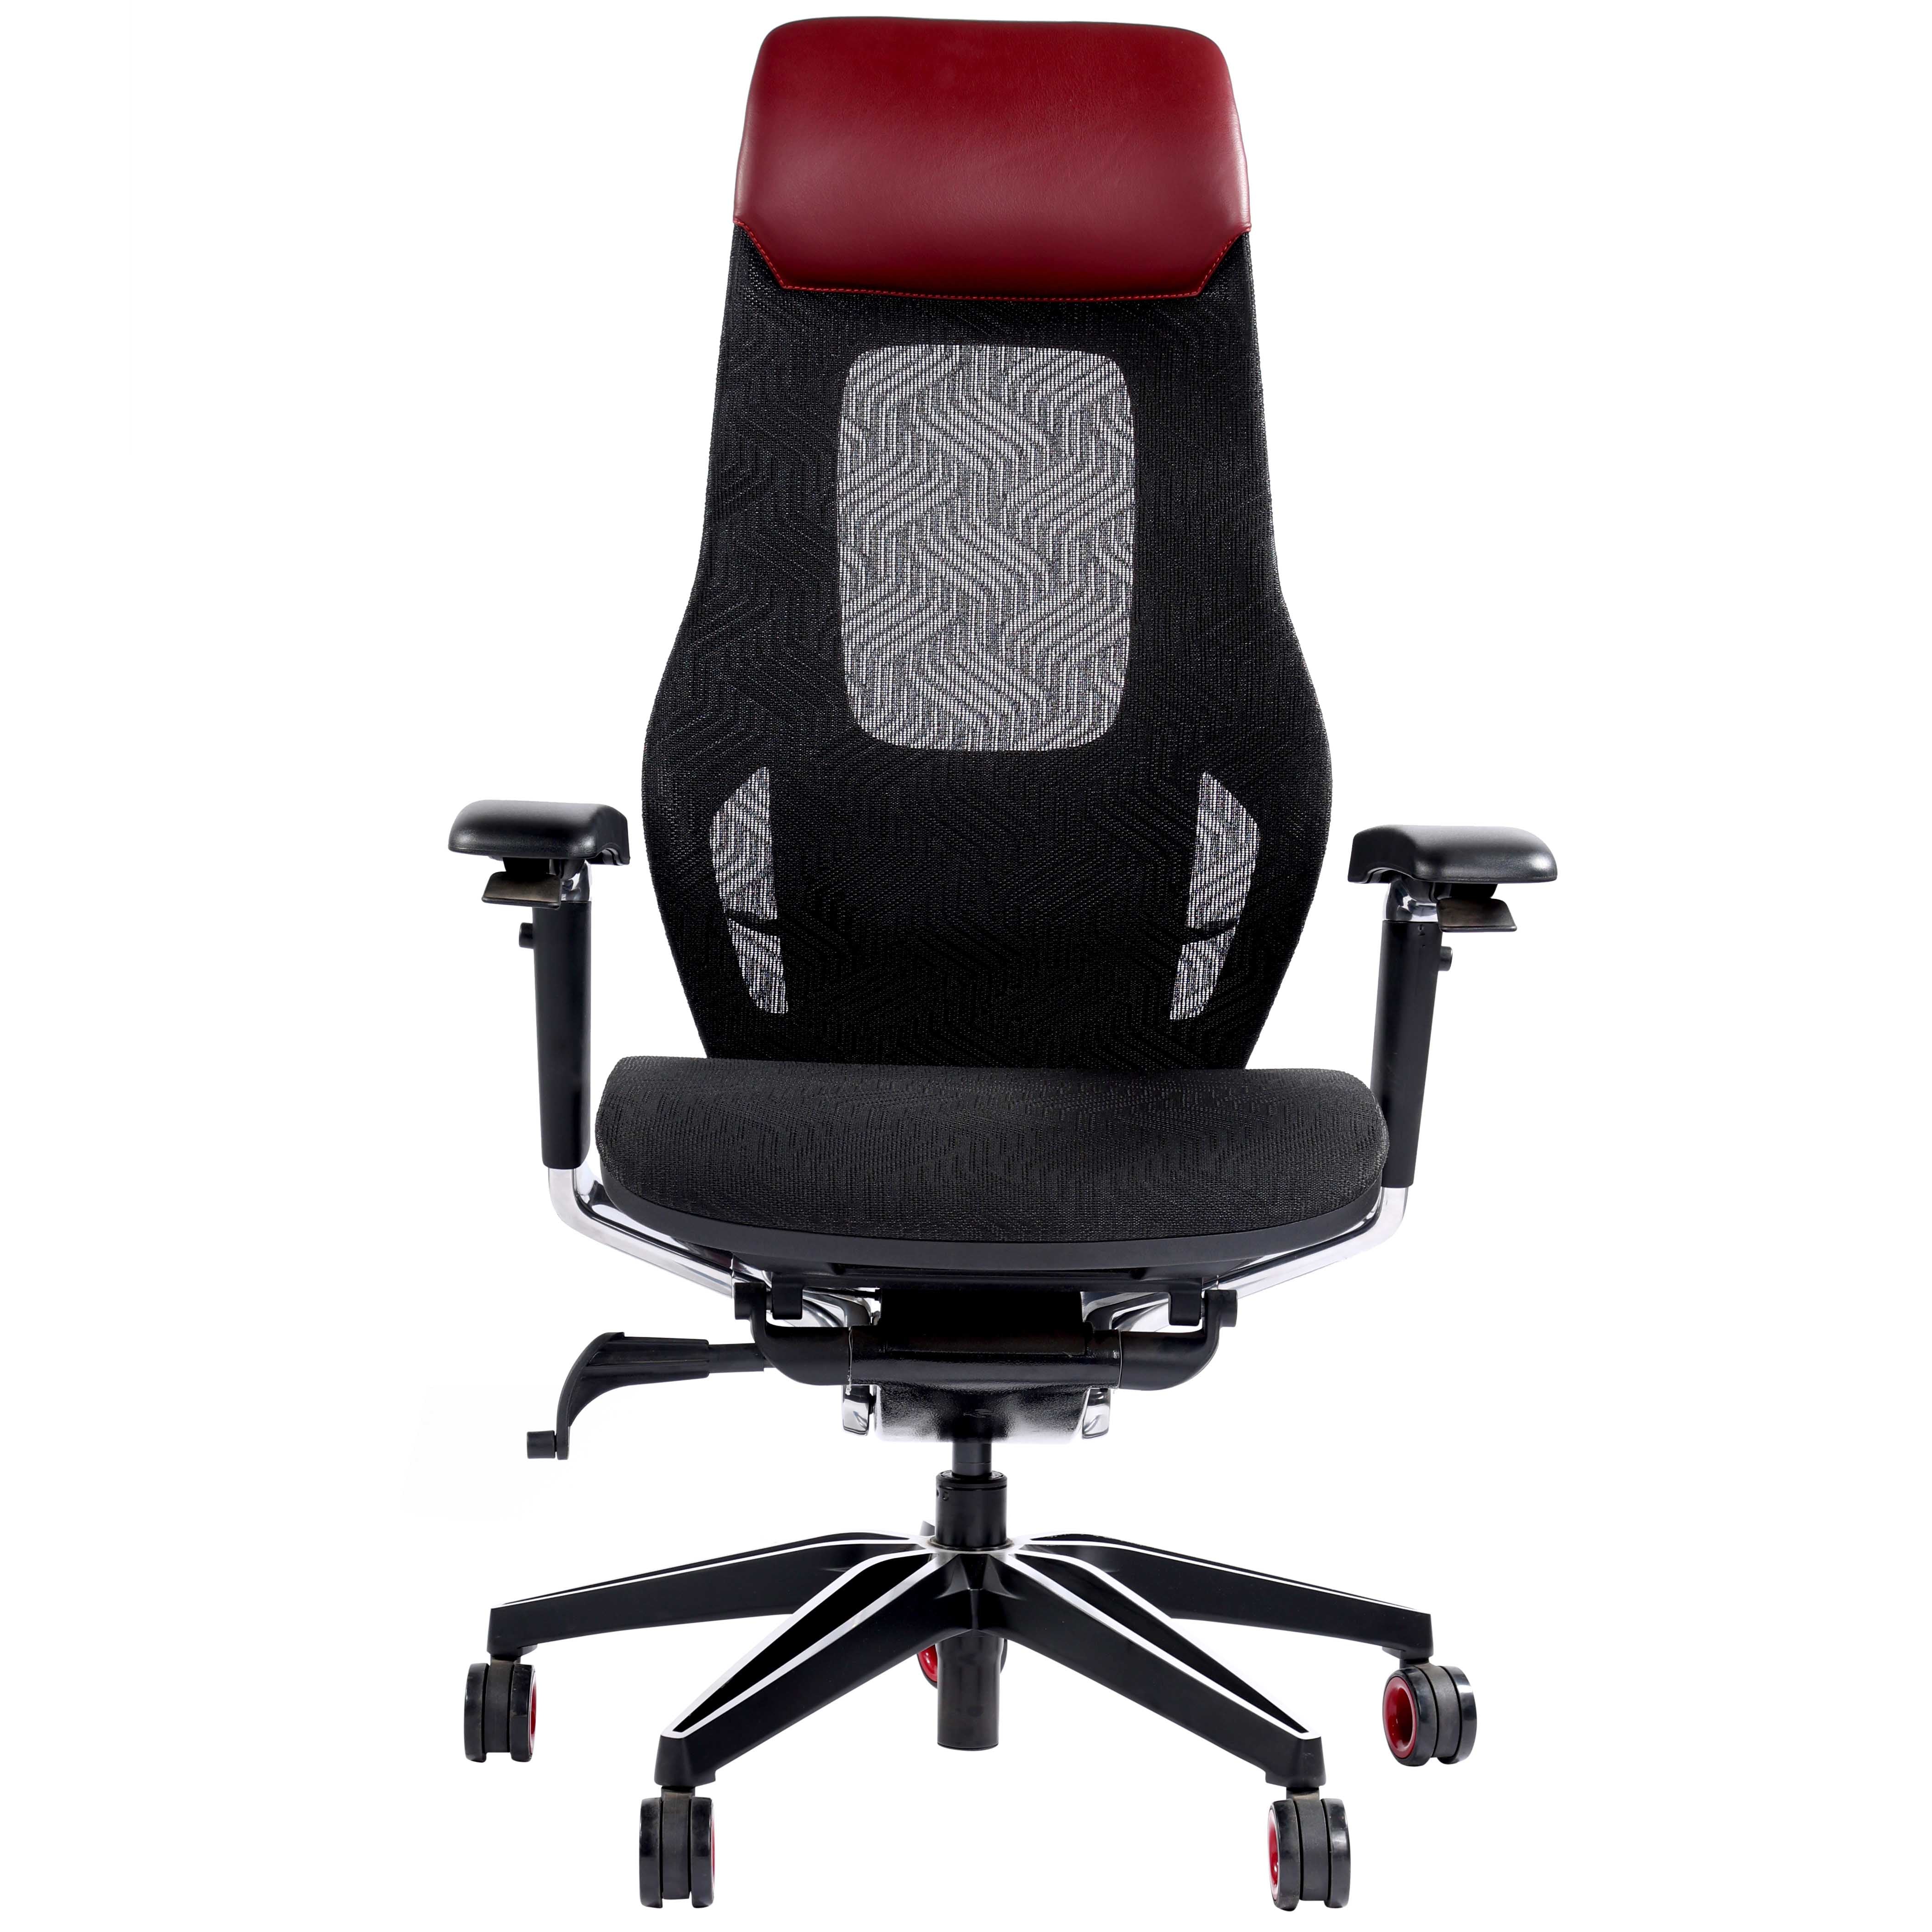 Ronald Top Line Premium Executive Ergonomic Office Chair - Red & Black Chair urbancart